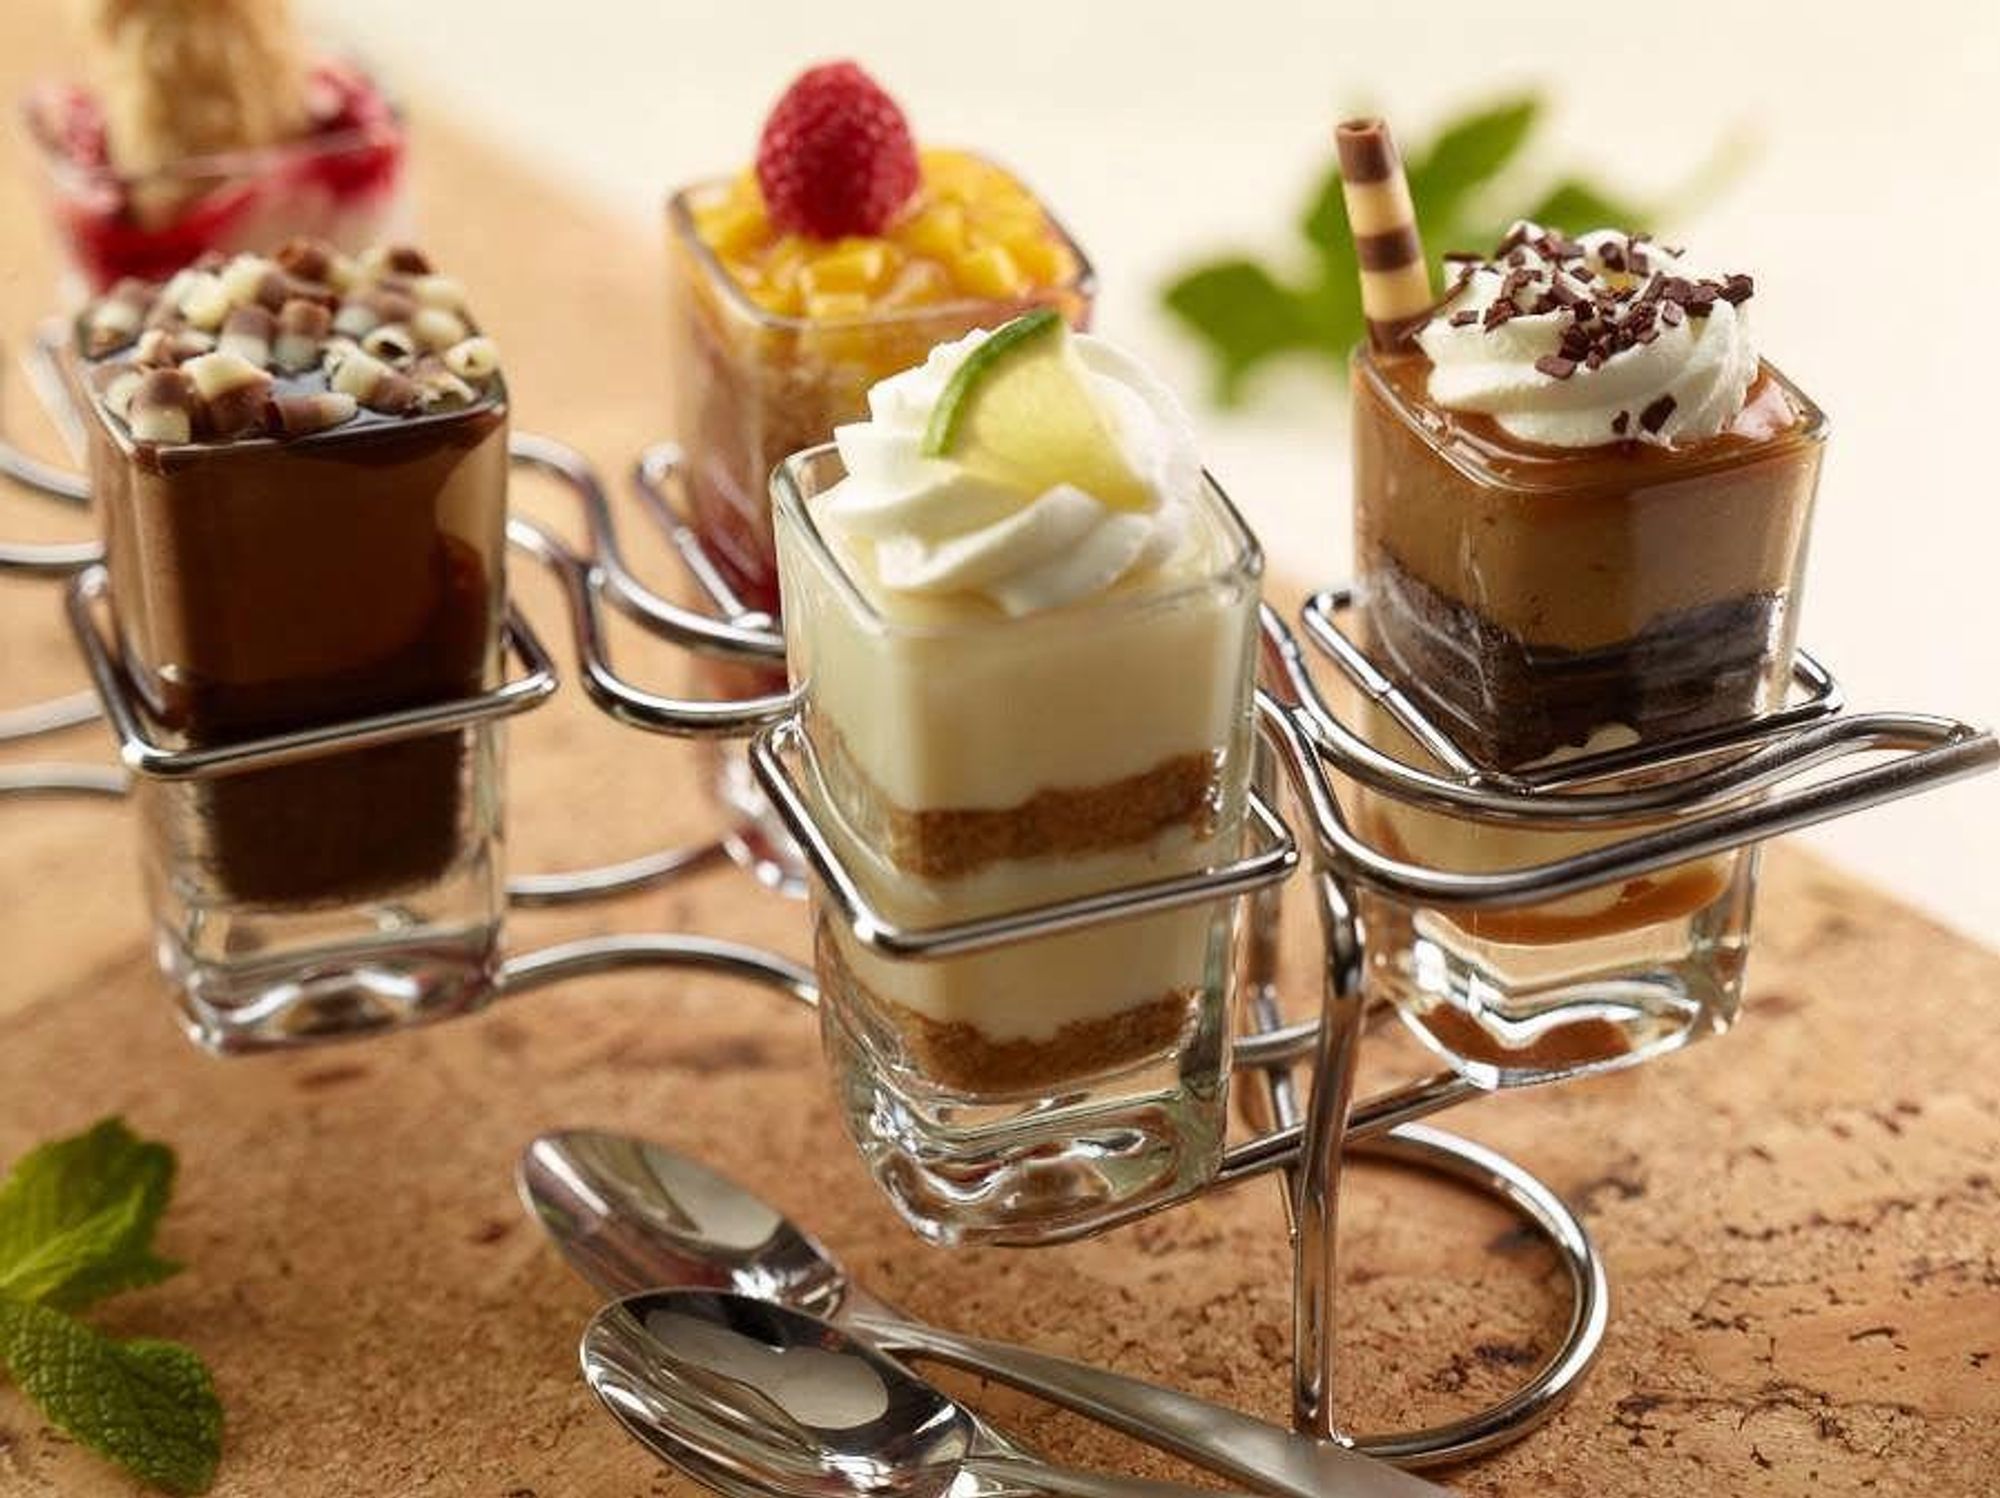 Seasons 52 mini-desserts